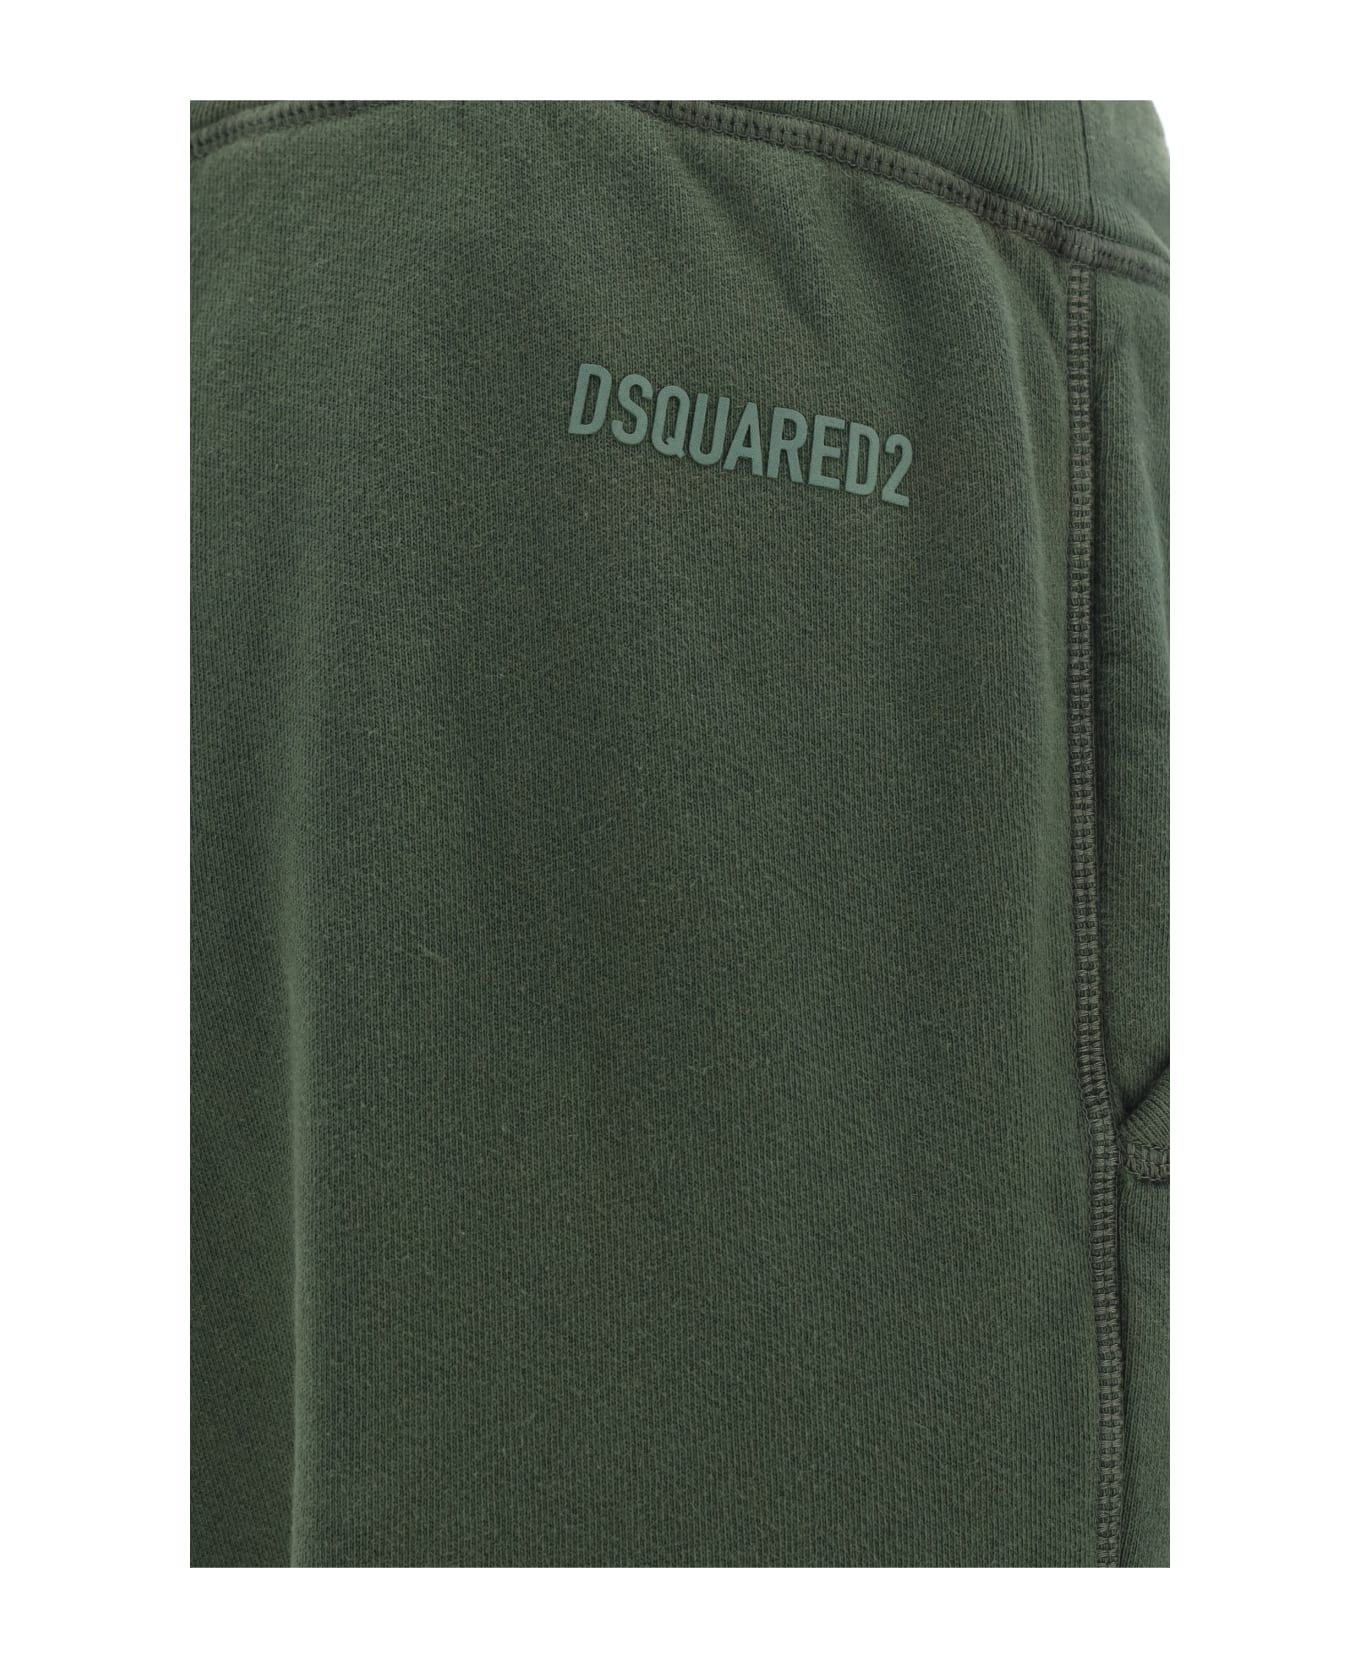 Dsquared2 Sweatpants - Military Green